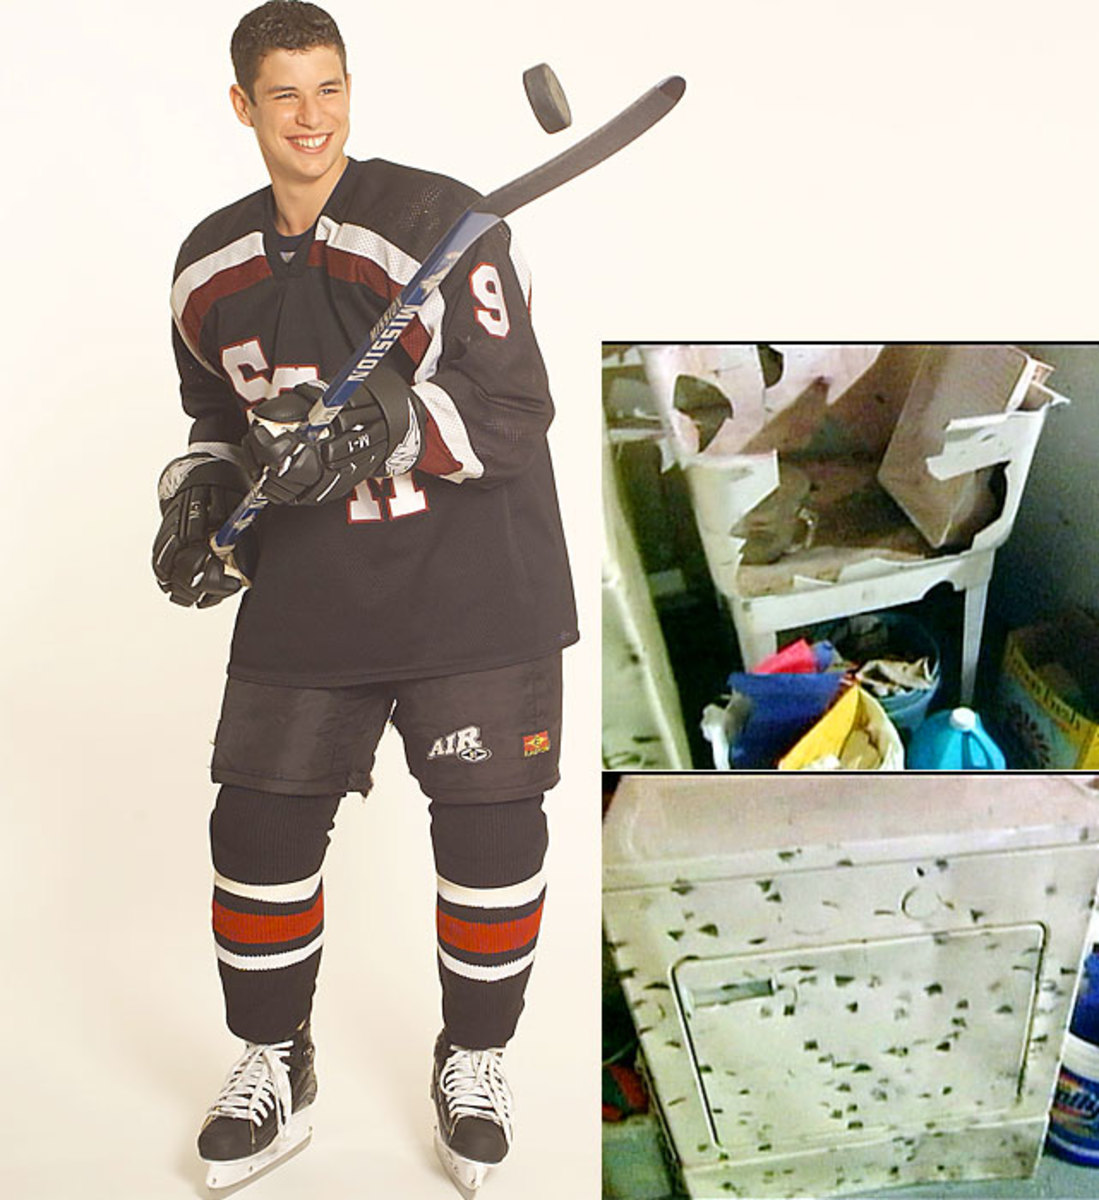 QMJHL, Rimouski Oceanic retire Sidney Crosby's jersey number